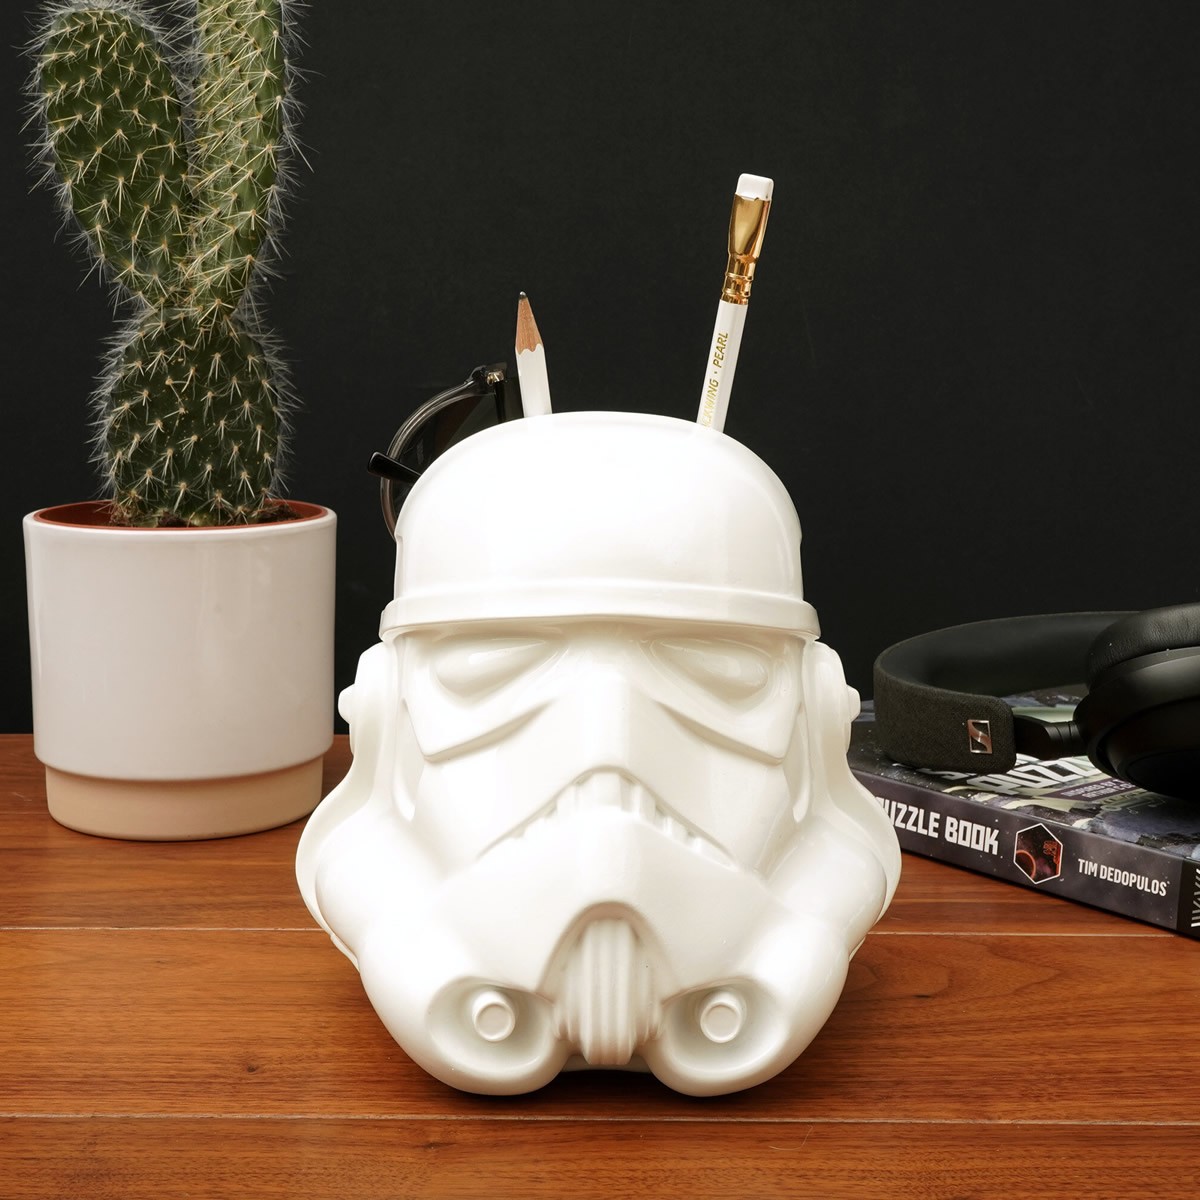 Originale Stormtrooper – bianco Stormtrooper Fermalibri Star Wars